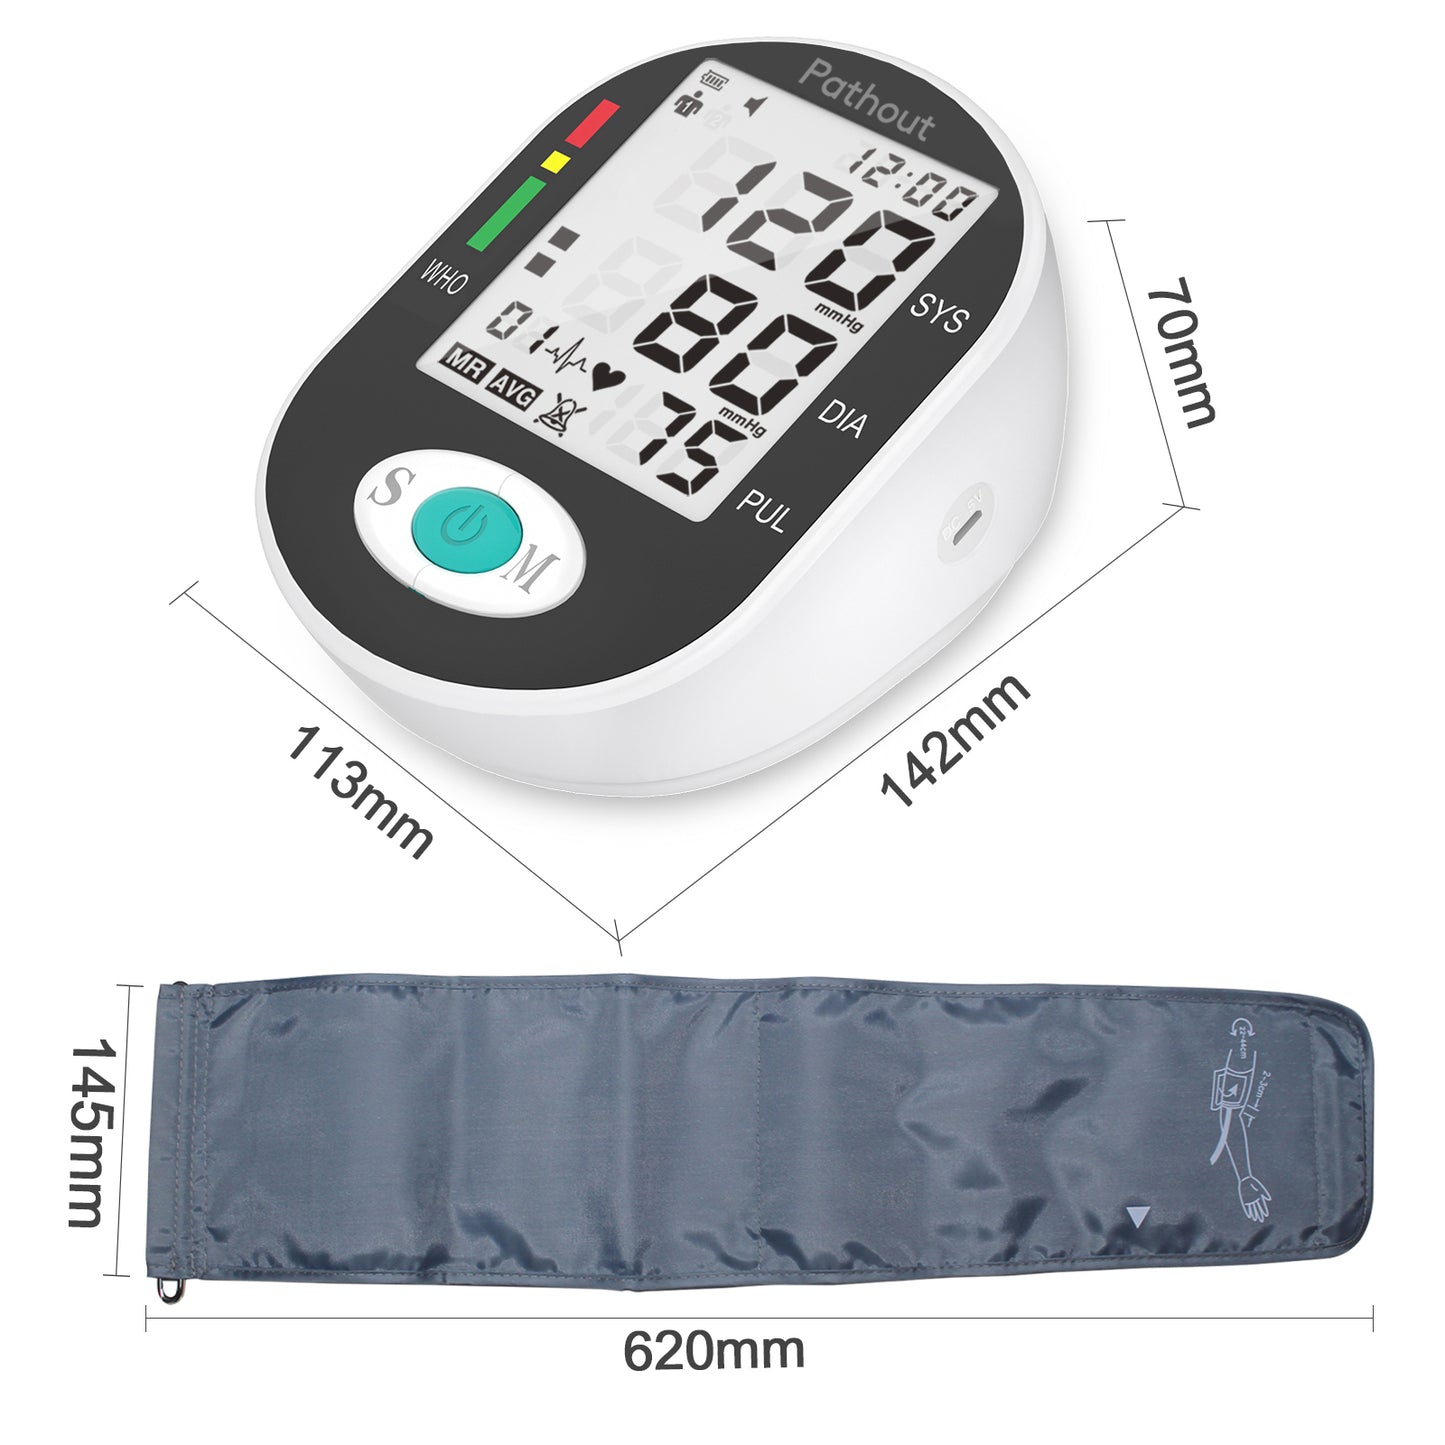 Pathout blood pressure monitor bp monitor sphygmomanometer